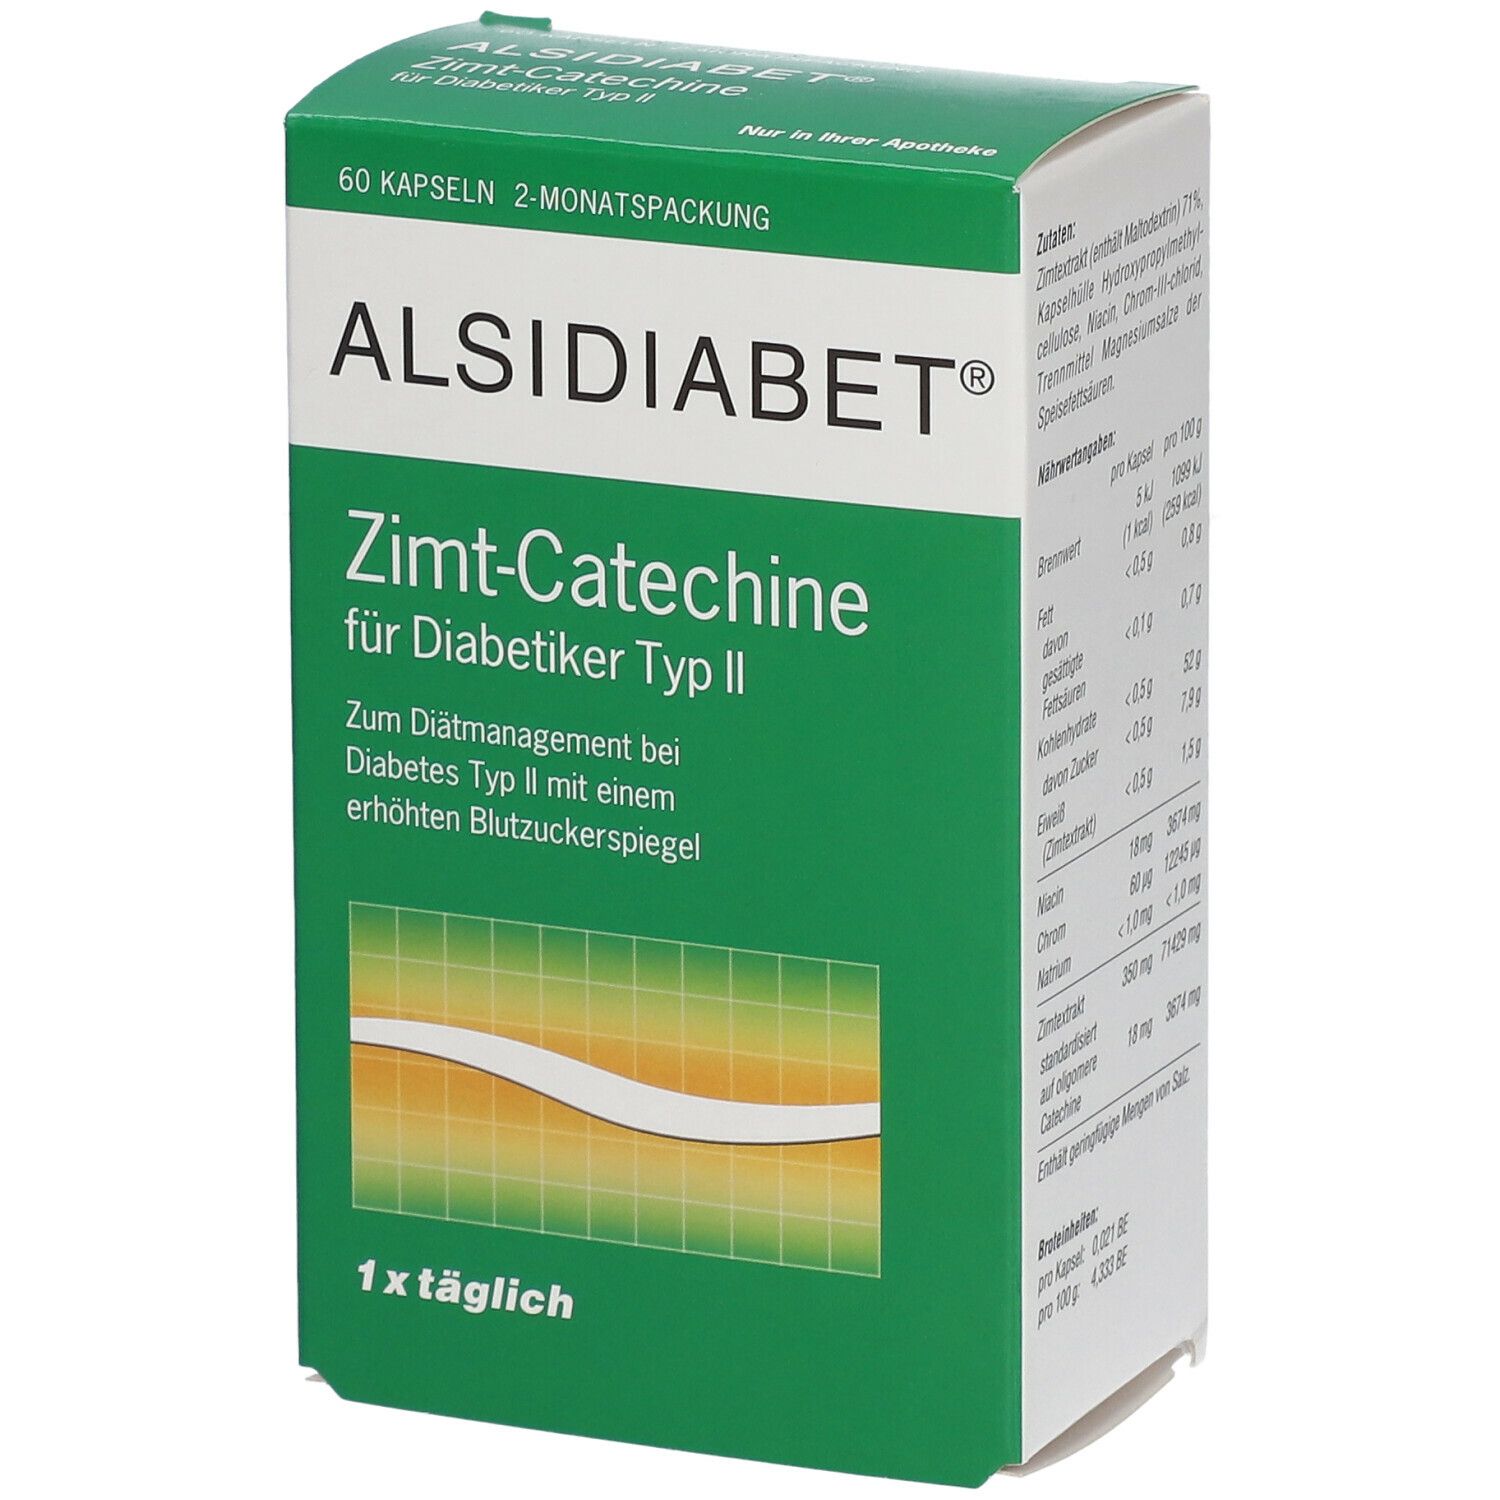 Alsidiabet® cinnamon catechins for Type II diabetic